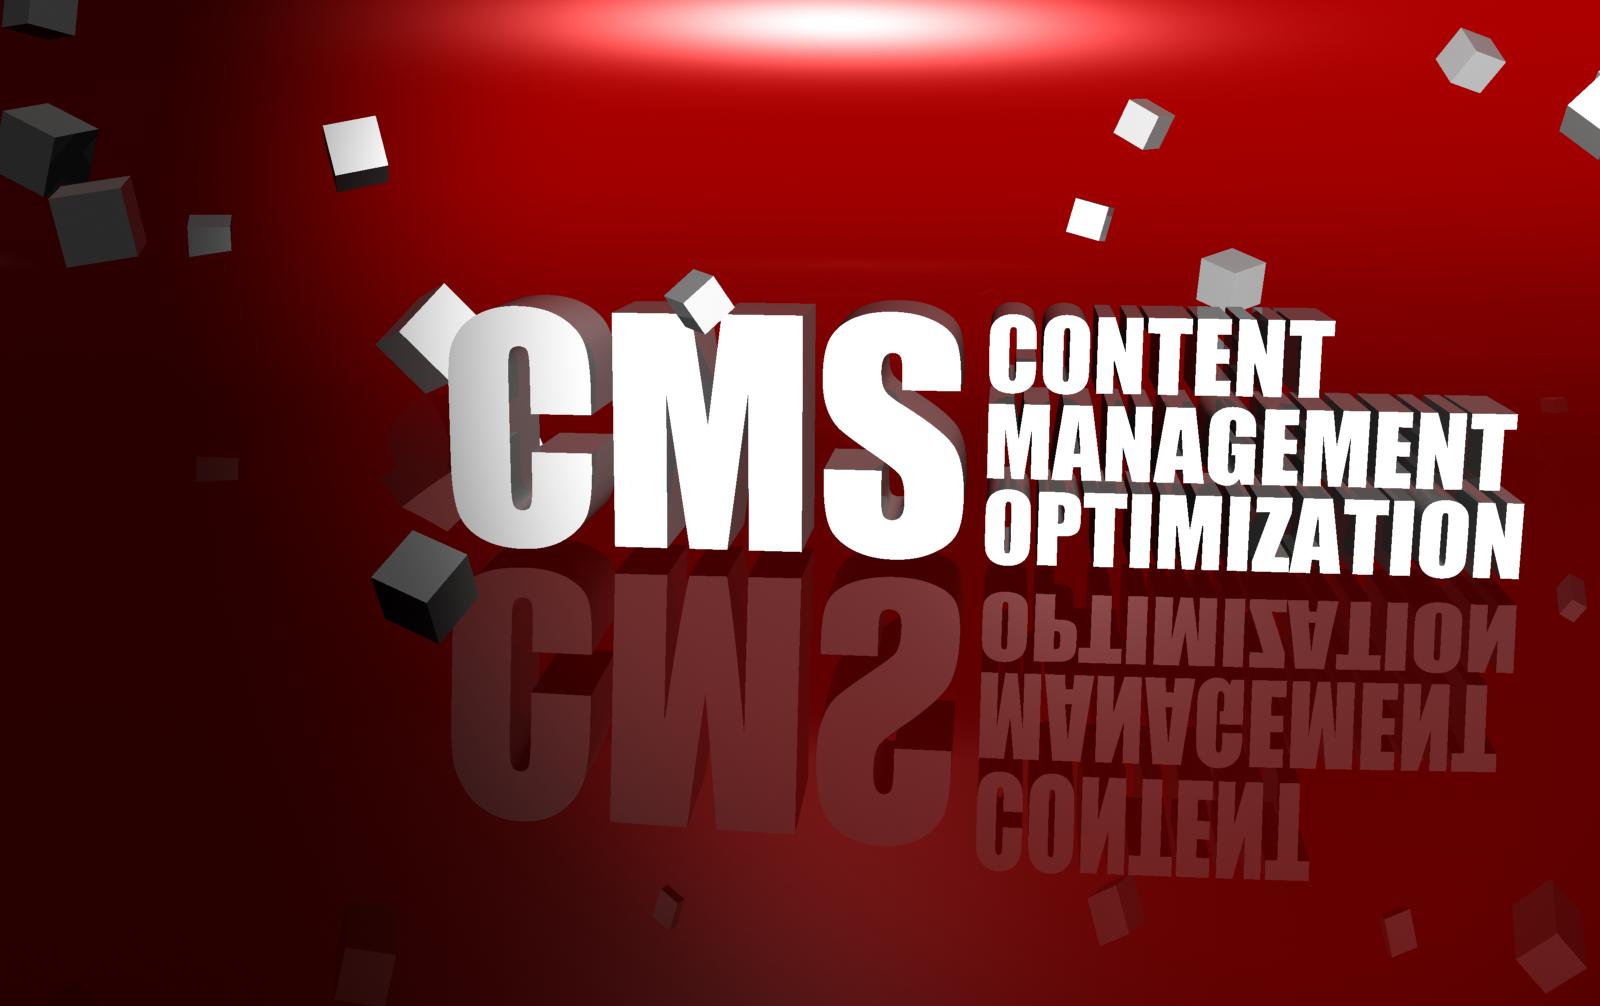 Wordpress - CMS